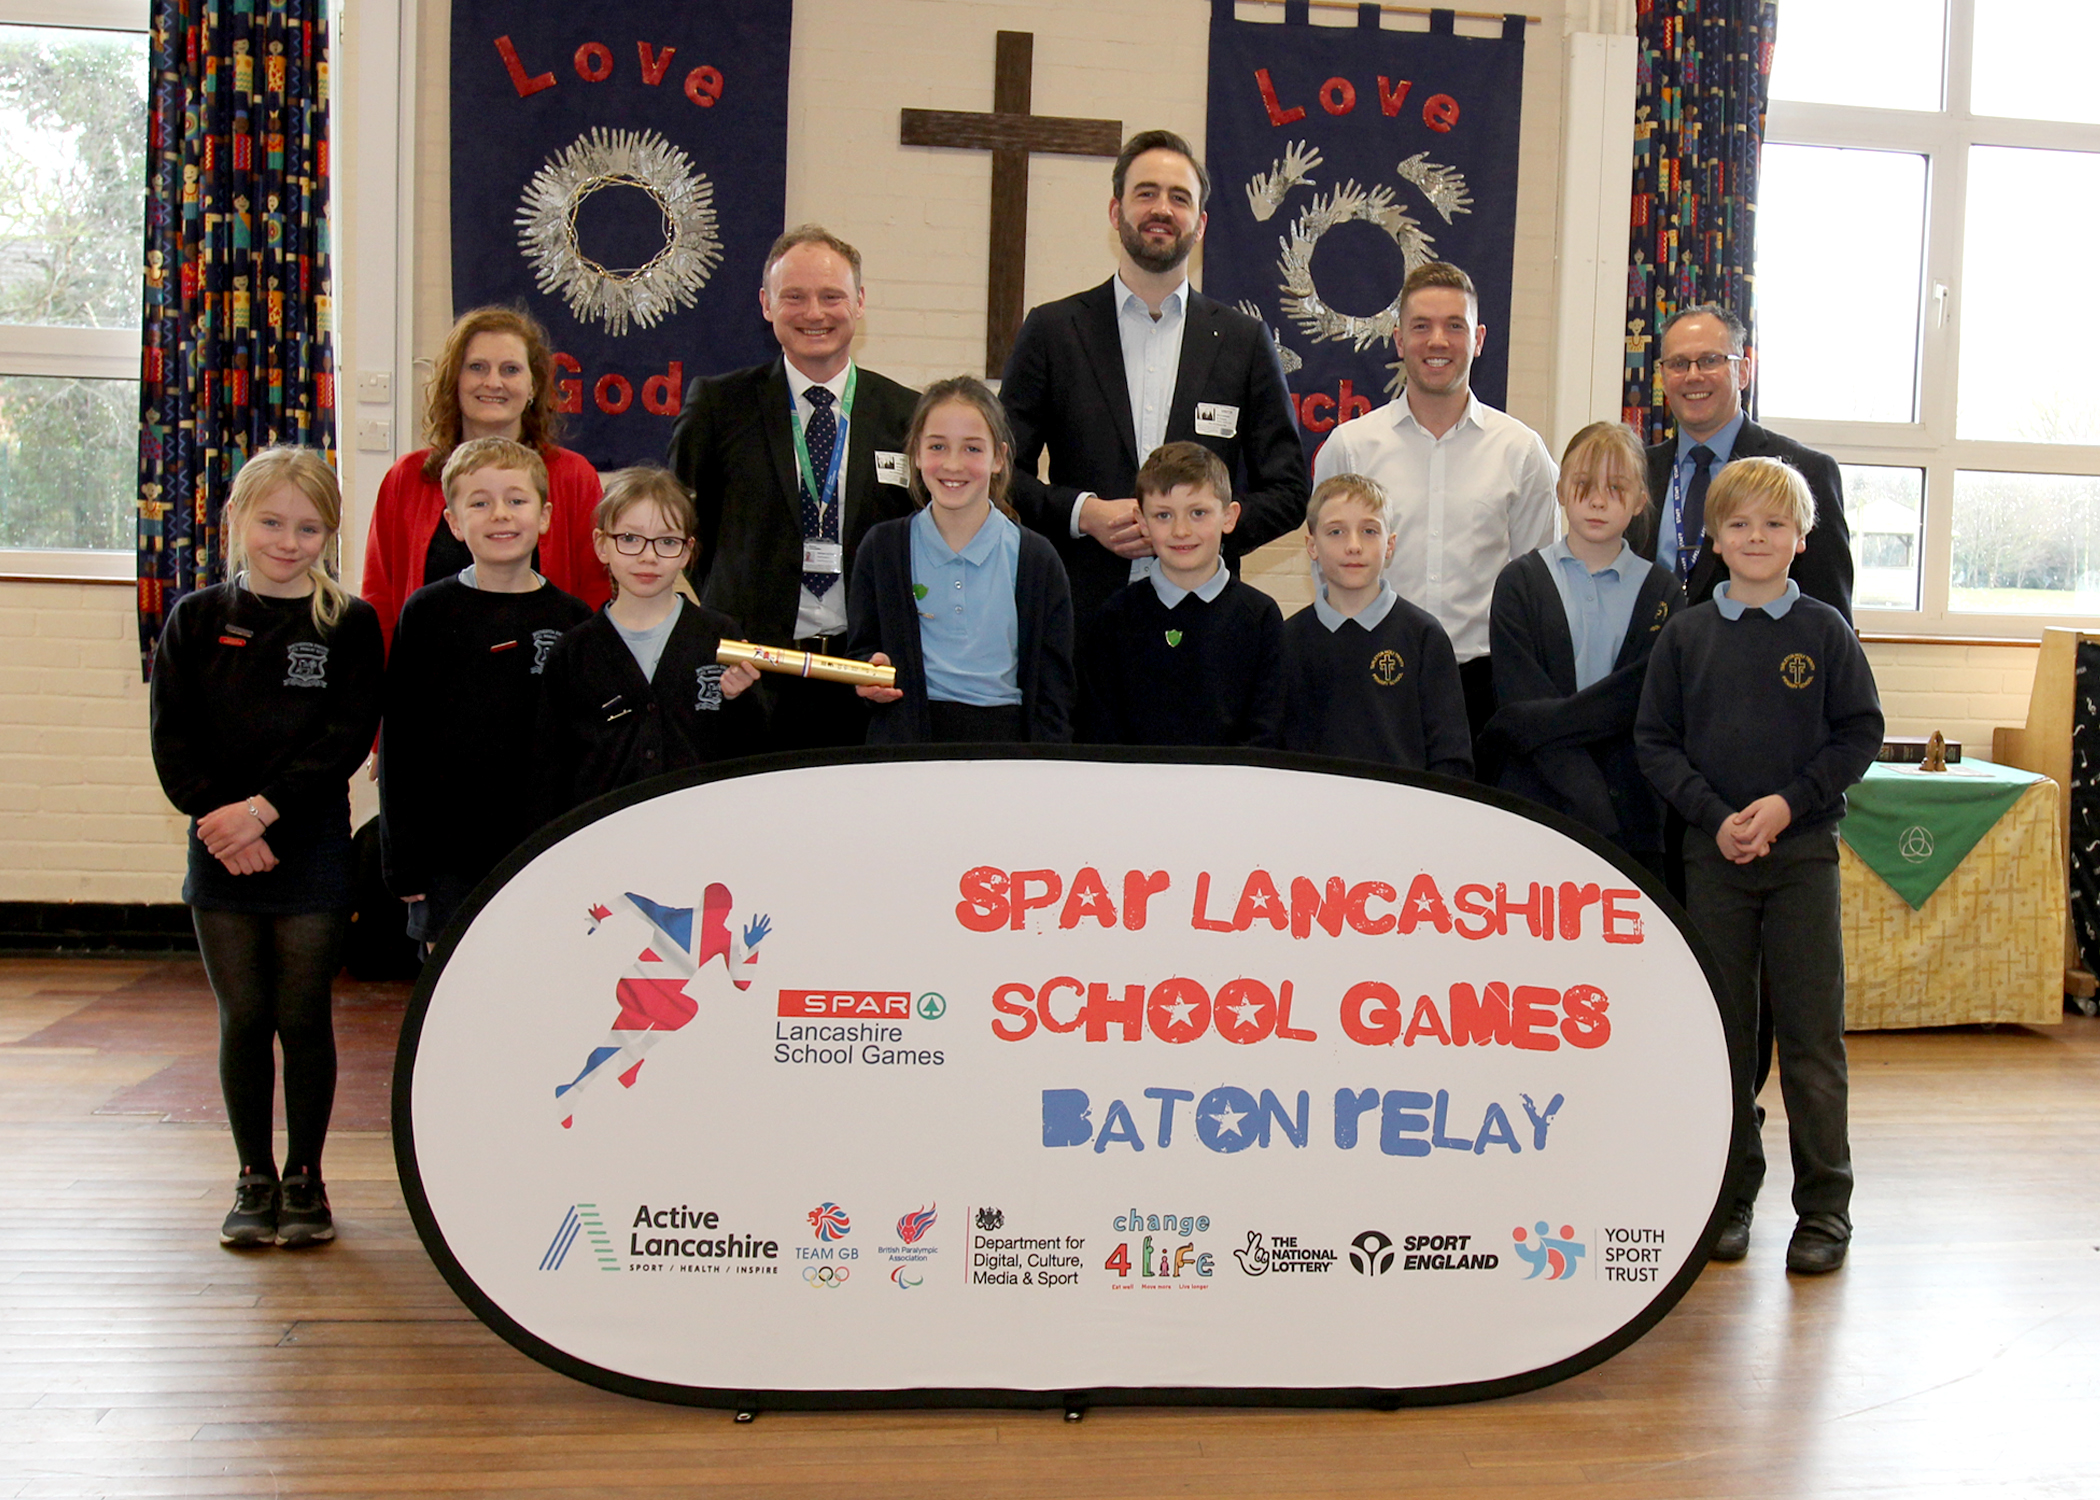 Baton relay begins as countdown to SPAR Lancashire School Games starts in Tarleton